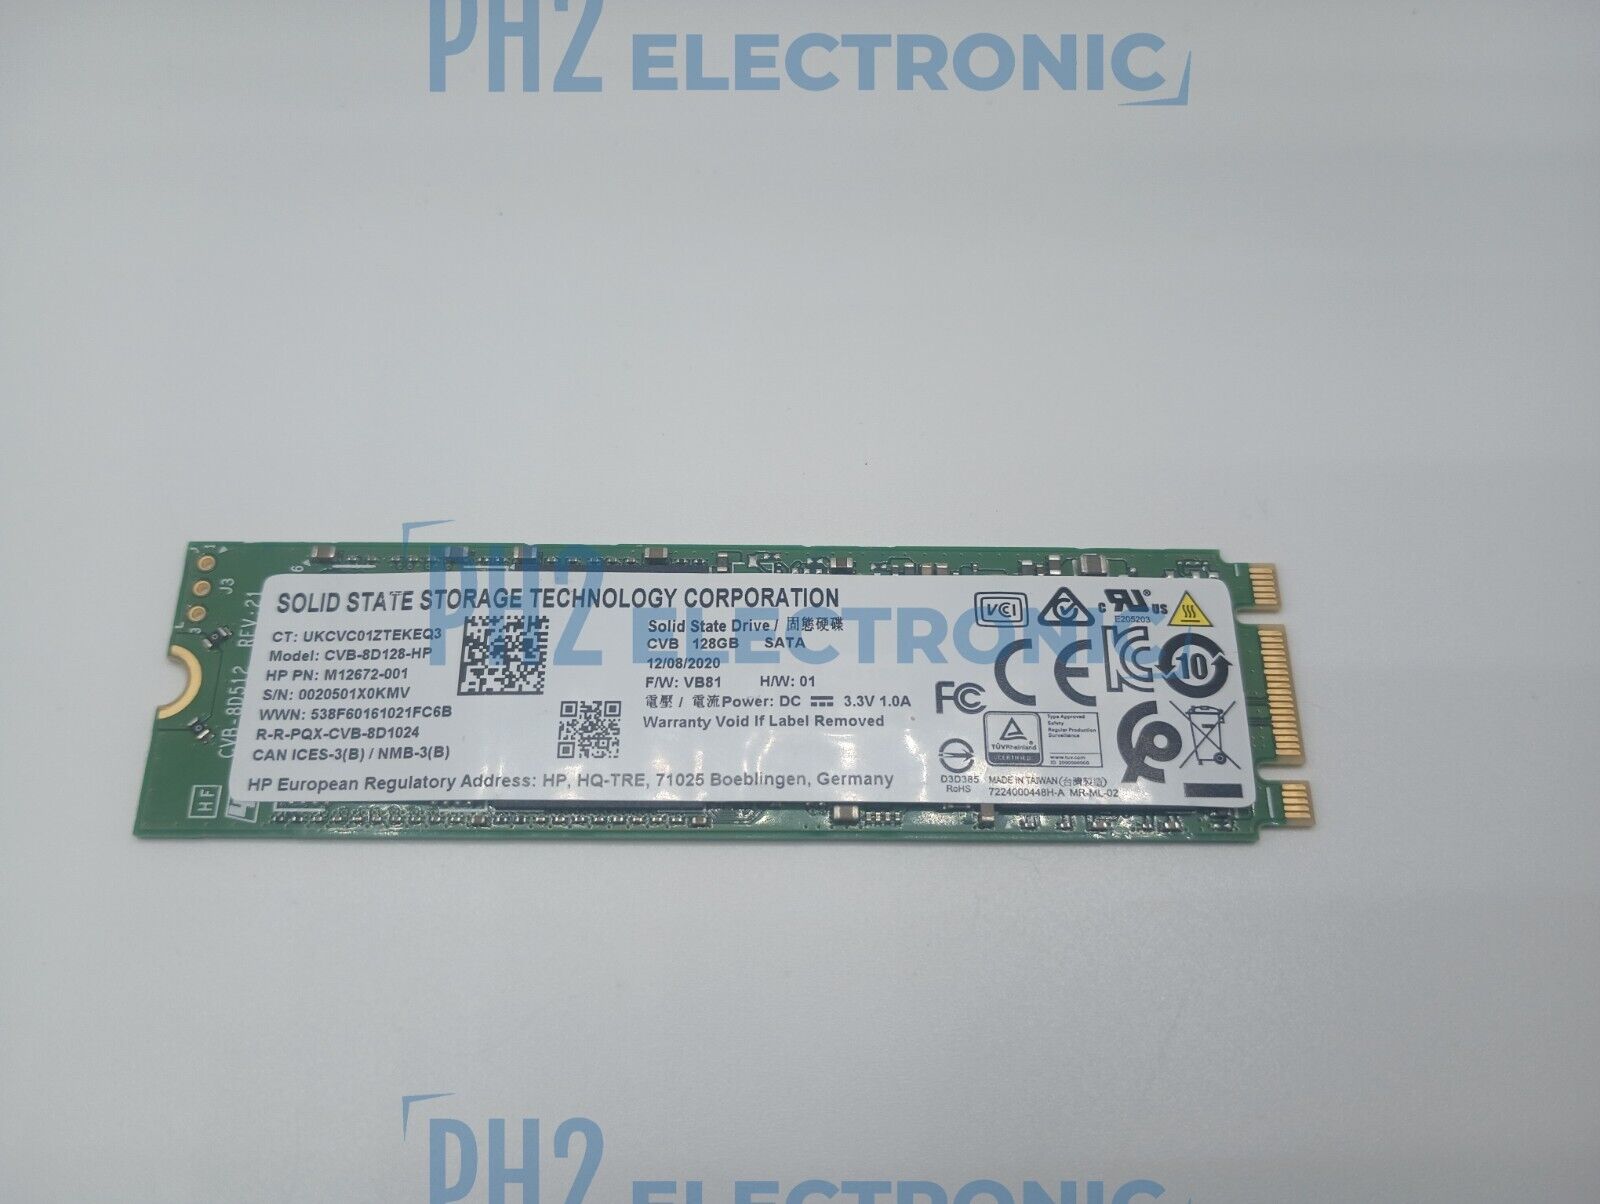 HPE	CVB-8D128-HP	M12672-001		KIOXIA 128GB SATA SSD Solid State Drive M.2 2280